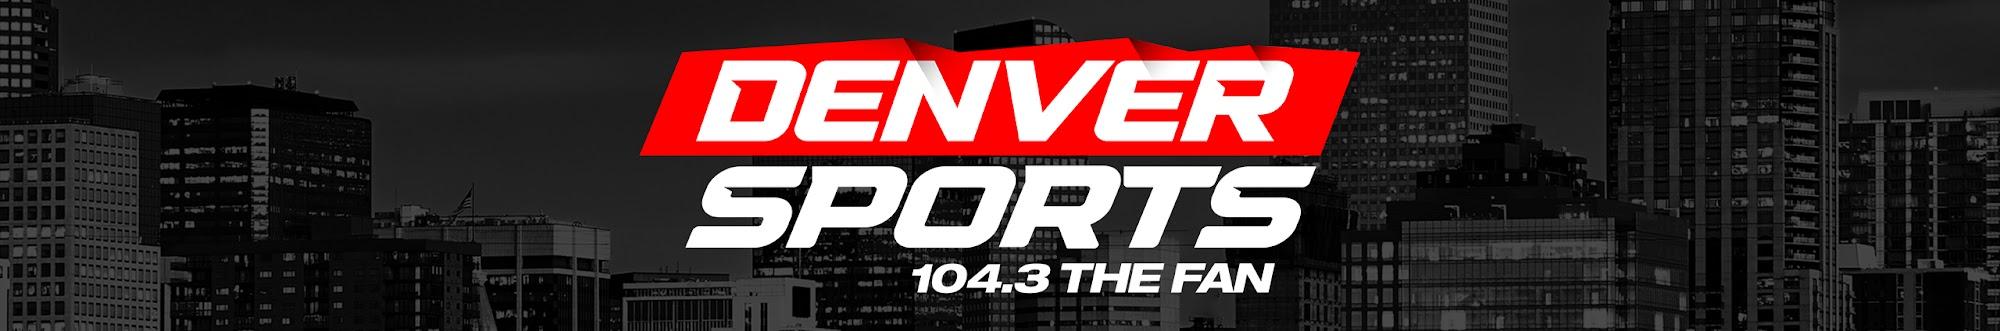 Denver Sports 104.3